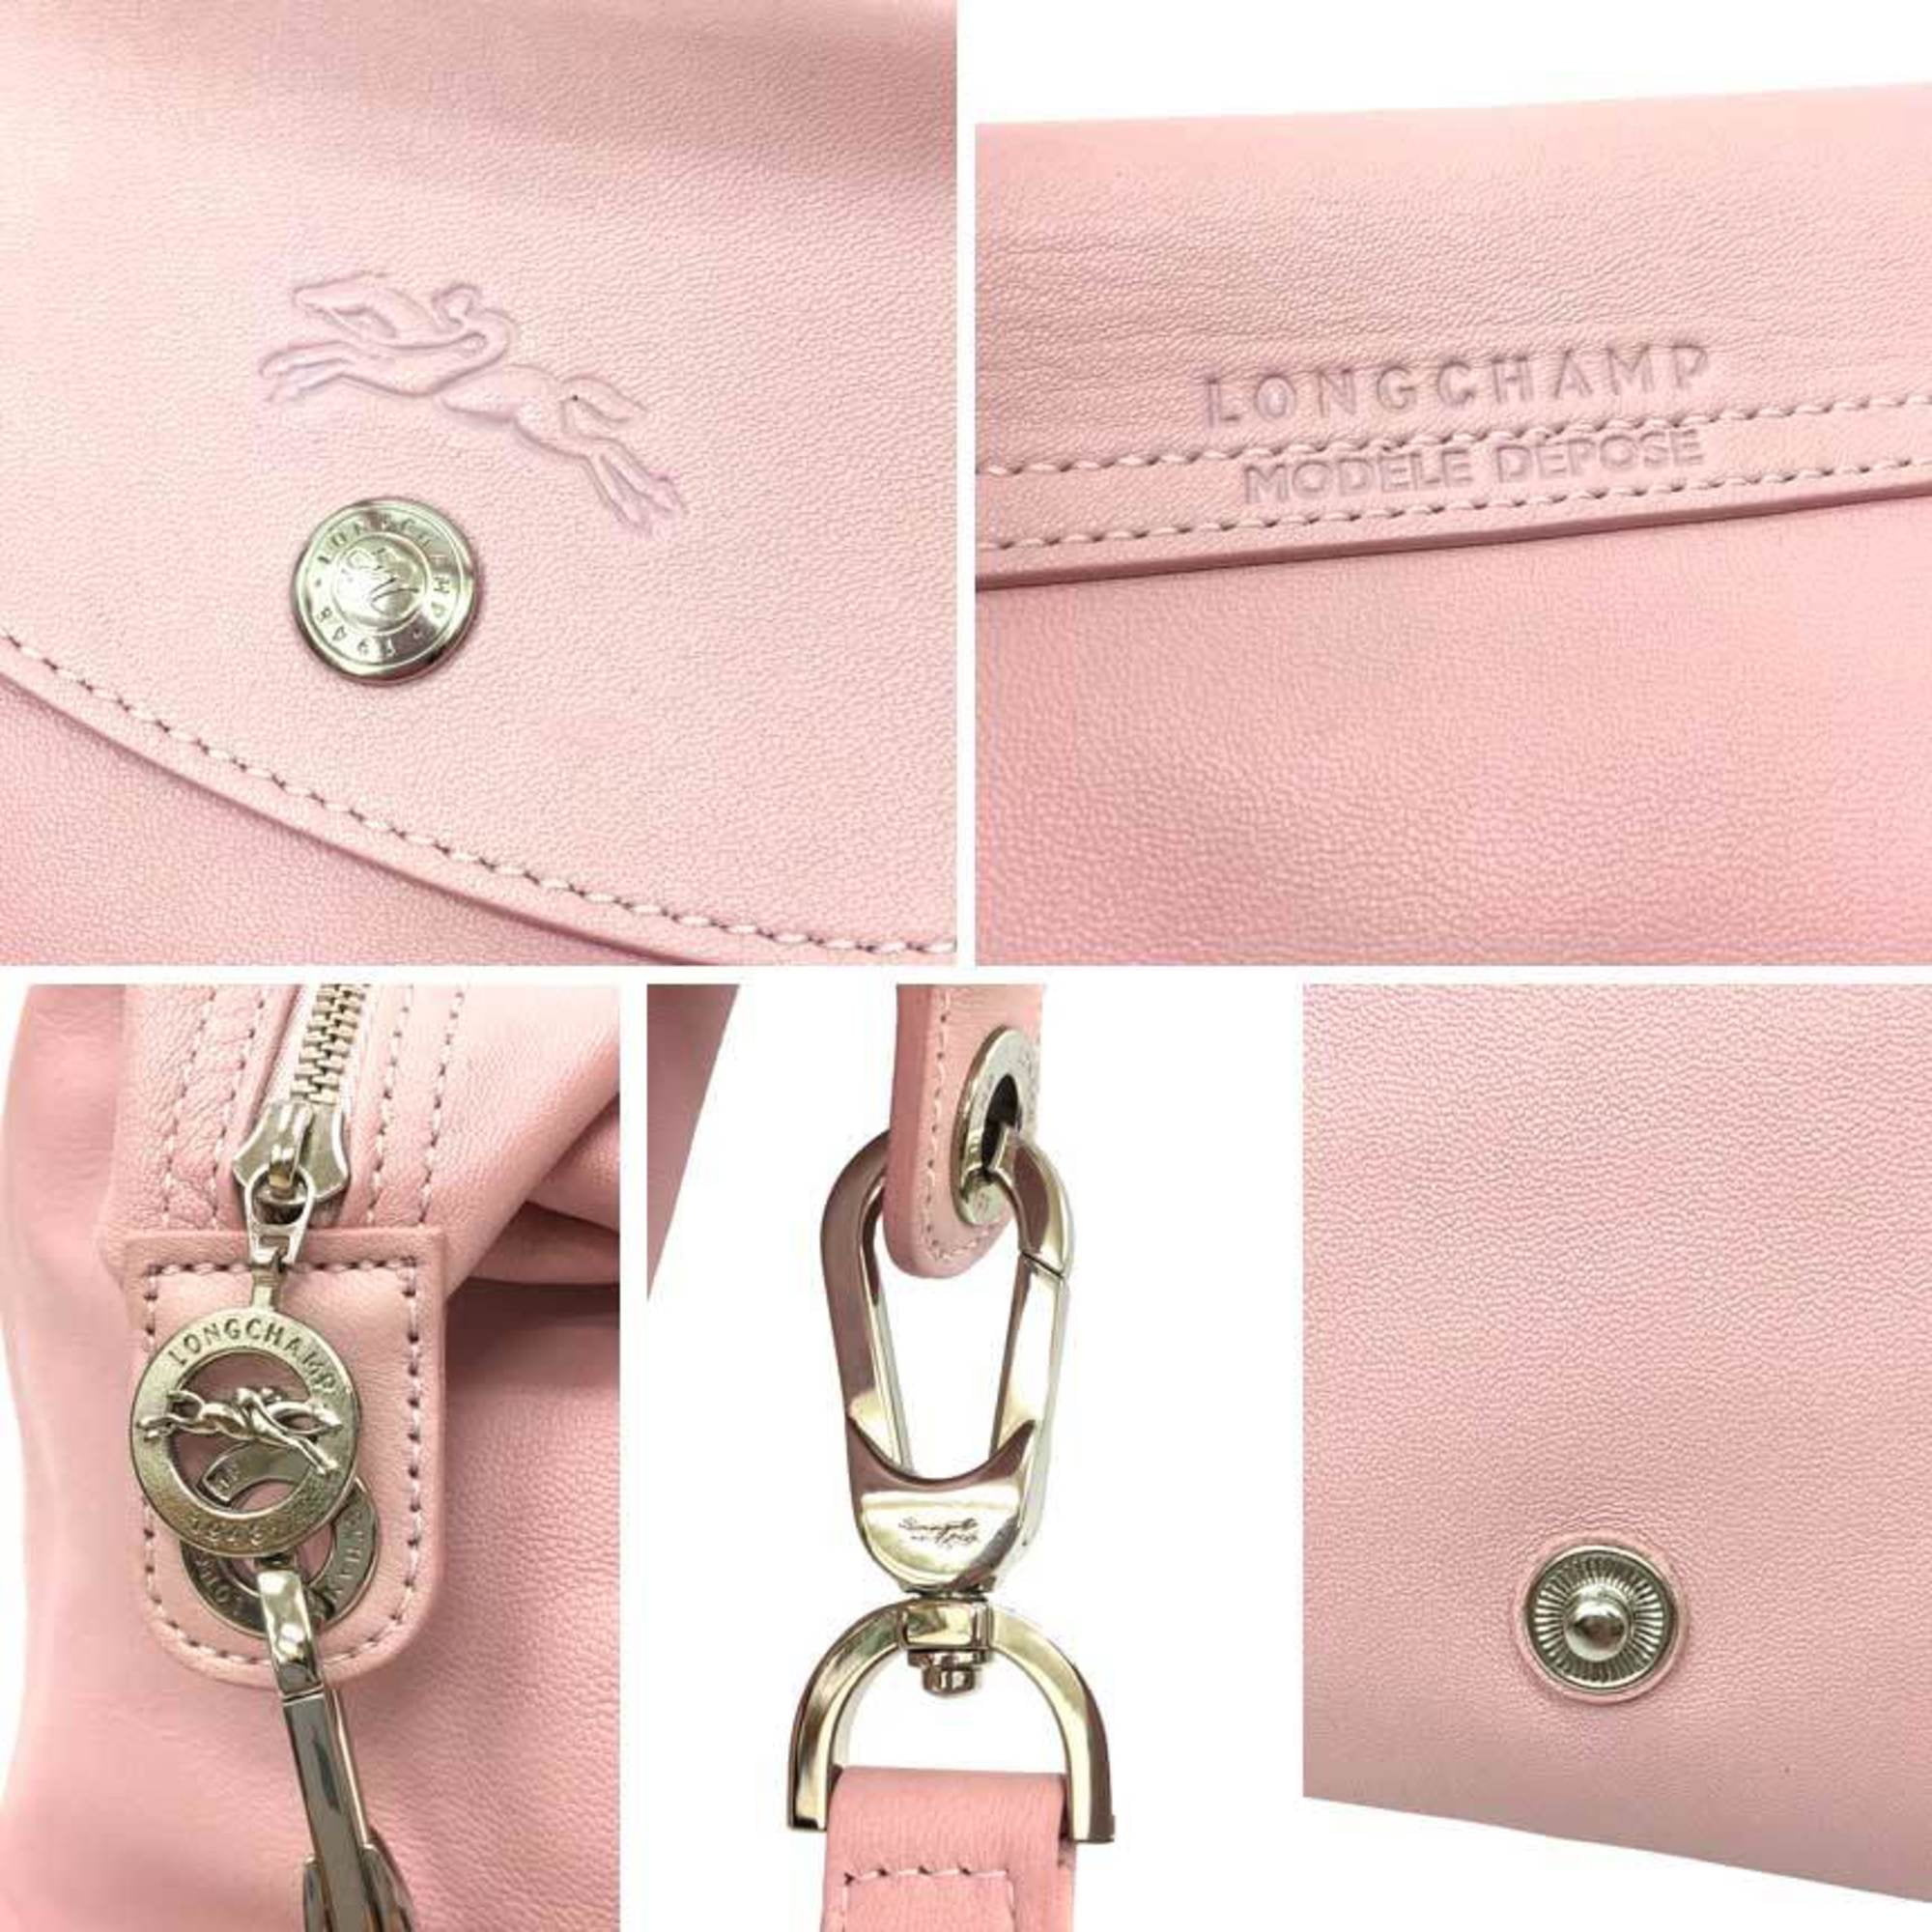 Longchamp Le Pliage Cuir leather bag Pink - $48 (90% Off Retail